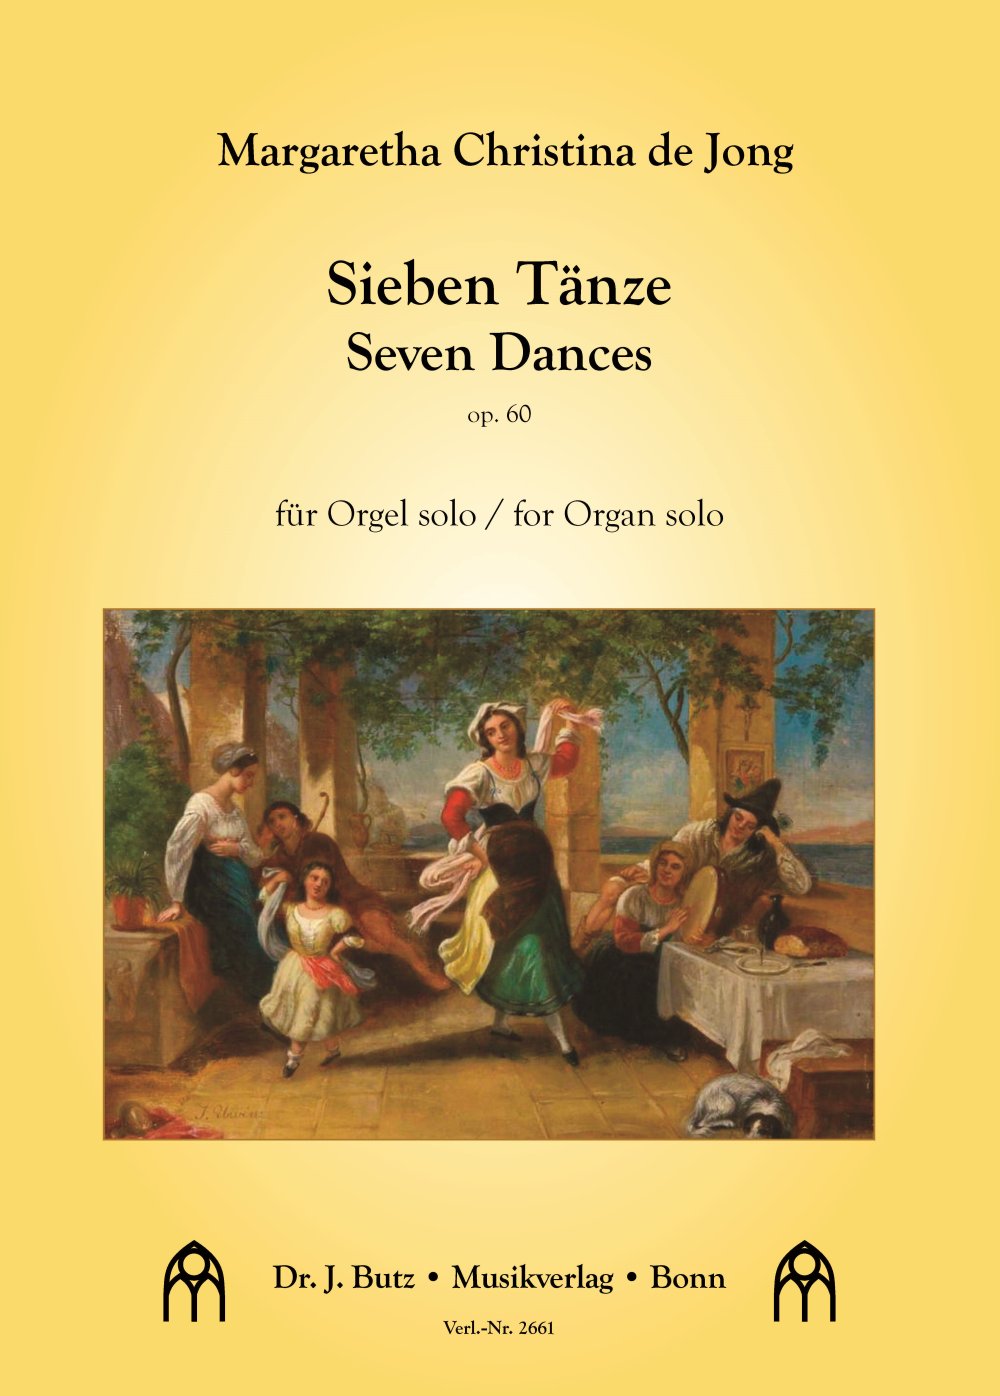 Sieben Tänze (Seven Dances)